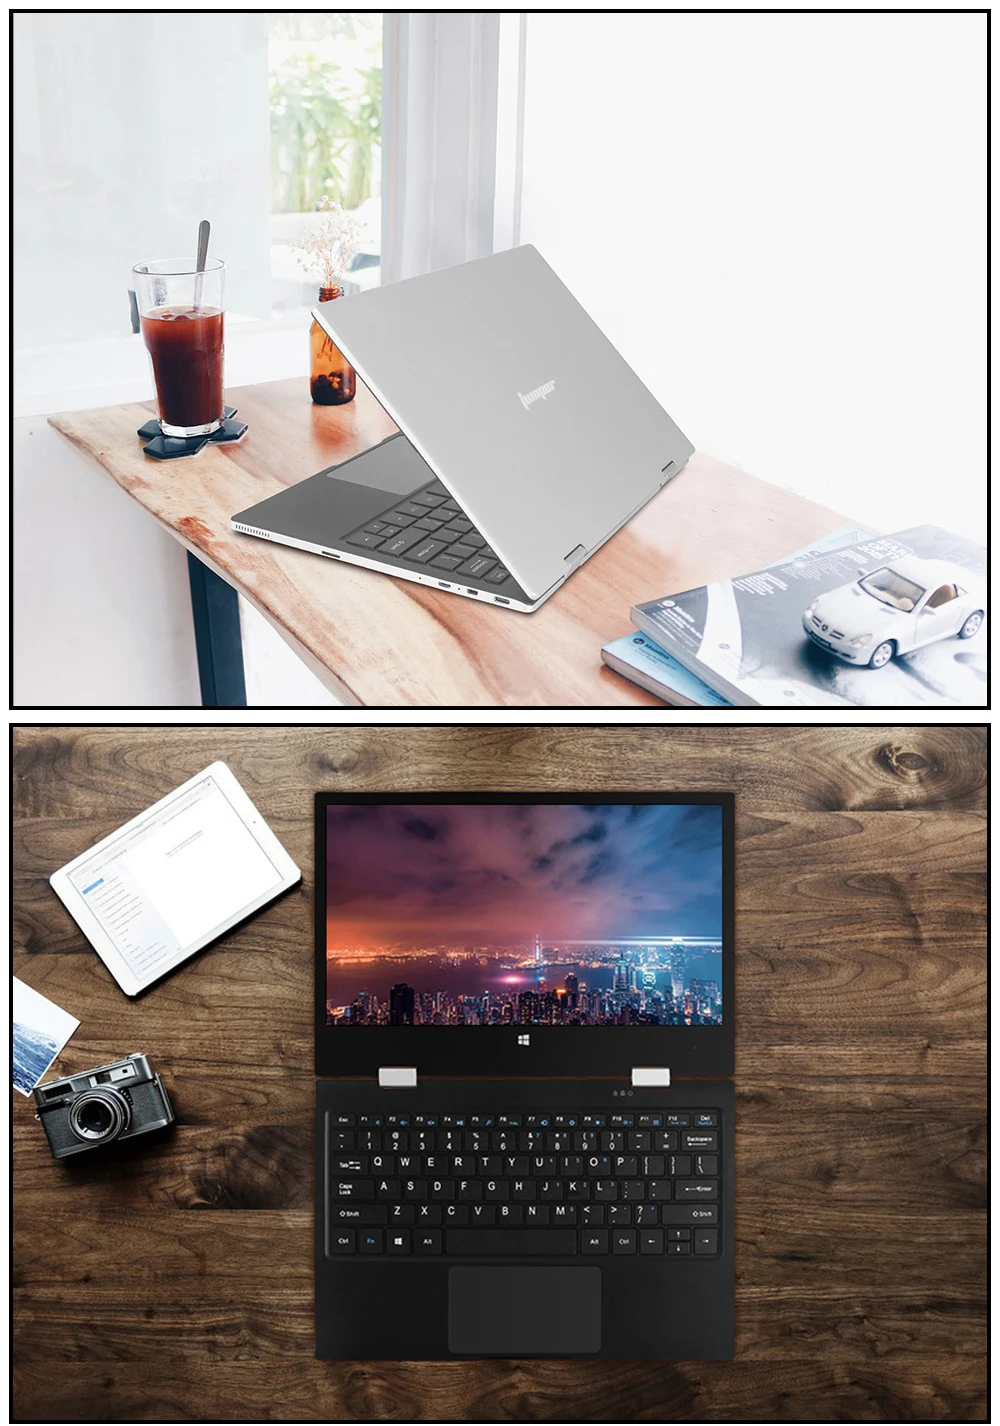 11," Ноутбук ips FHD с сенсорным дисплеем ноутбук 4 Гб 64 Гб eMMC 64 Гб SSD ультрабук Apollo Lake N3350 Jumper EZbook X1 Windows компьютер